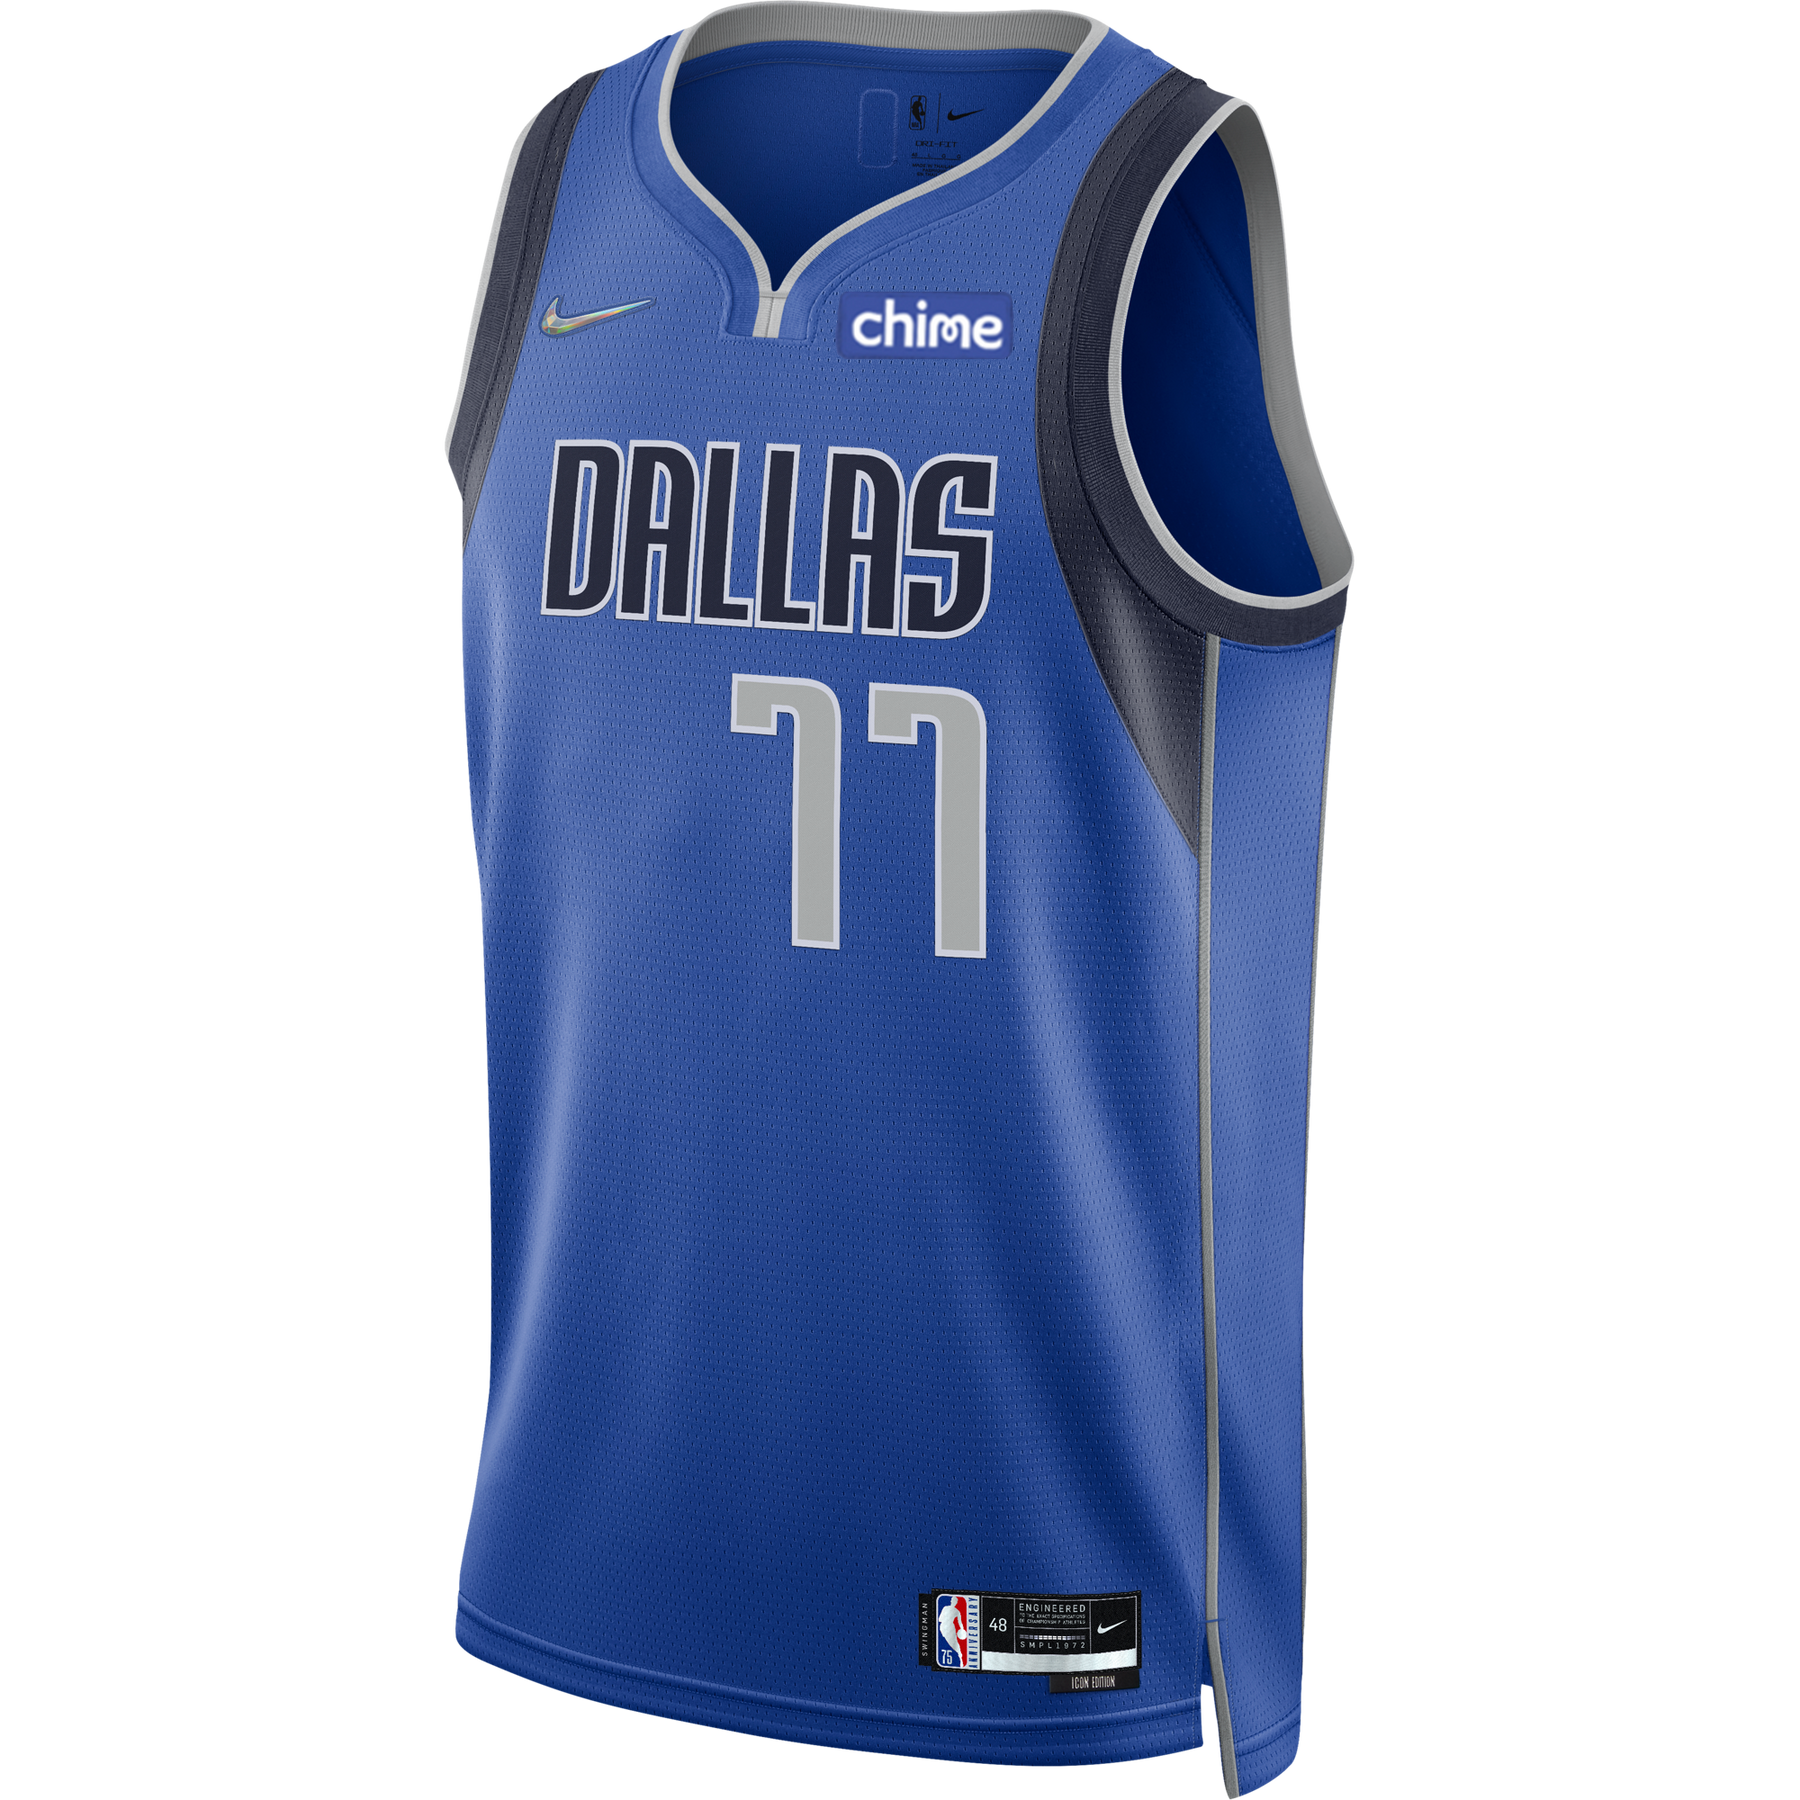 Dallas Mavericks Apparel, Dallas Mavericks Jerseys, Dallas